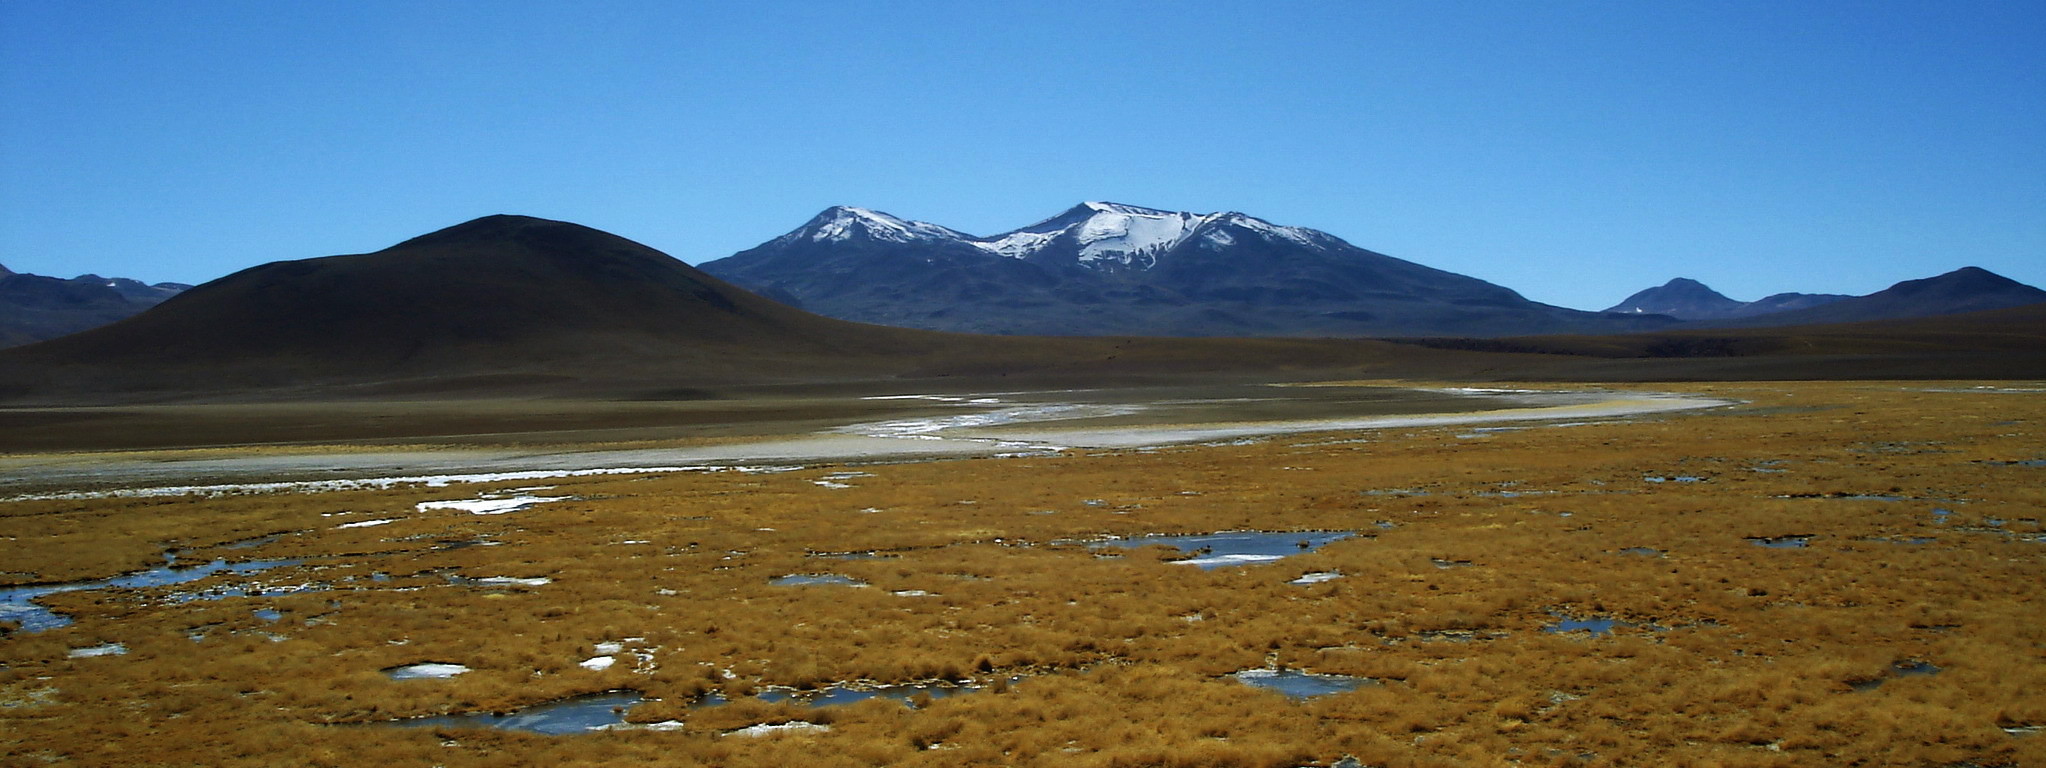 Romanceor Altiplano 2